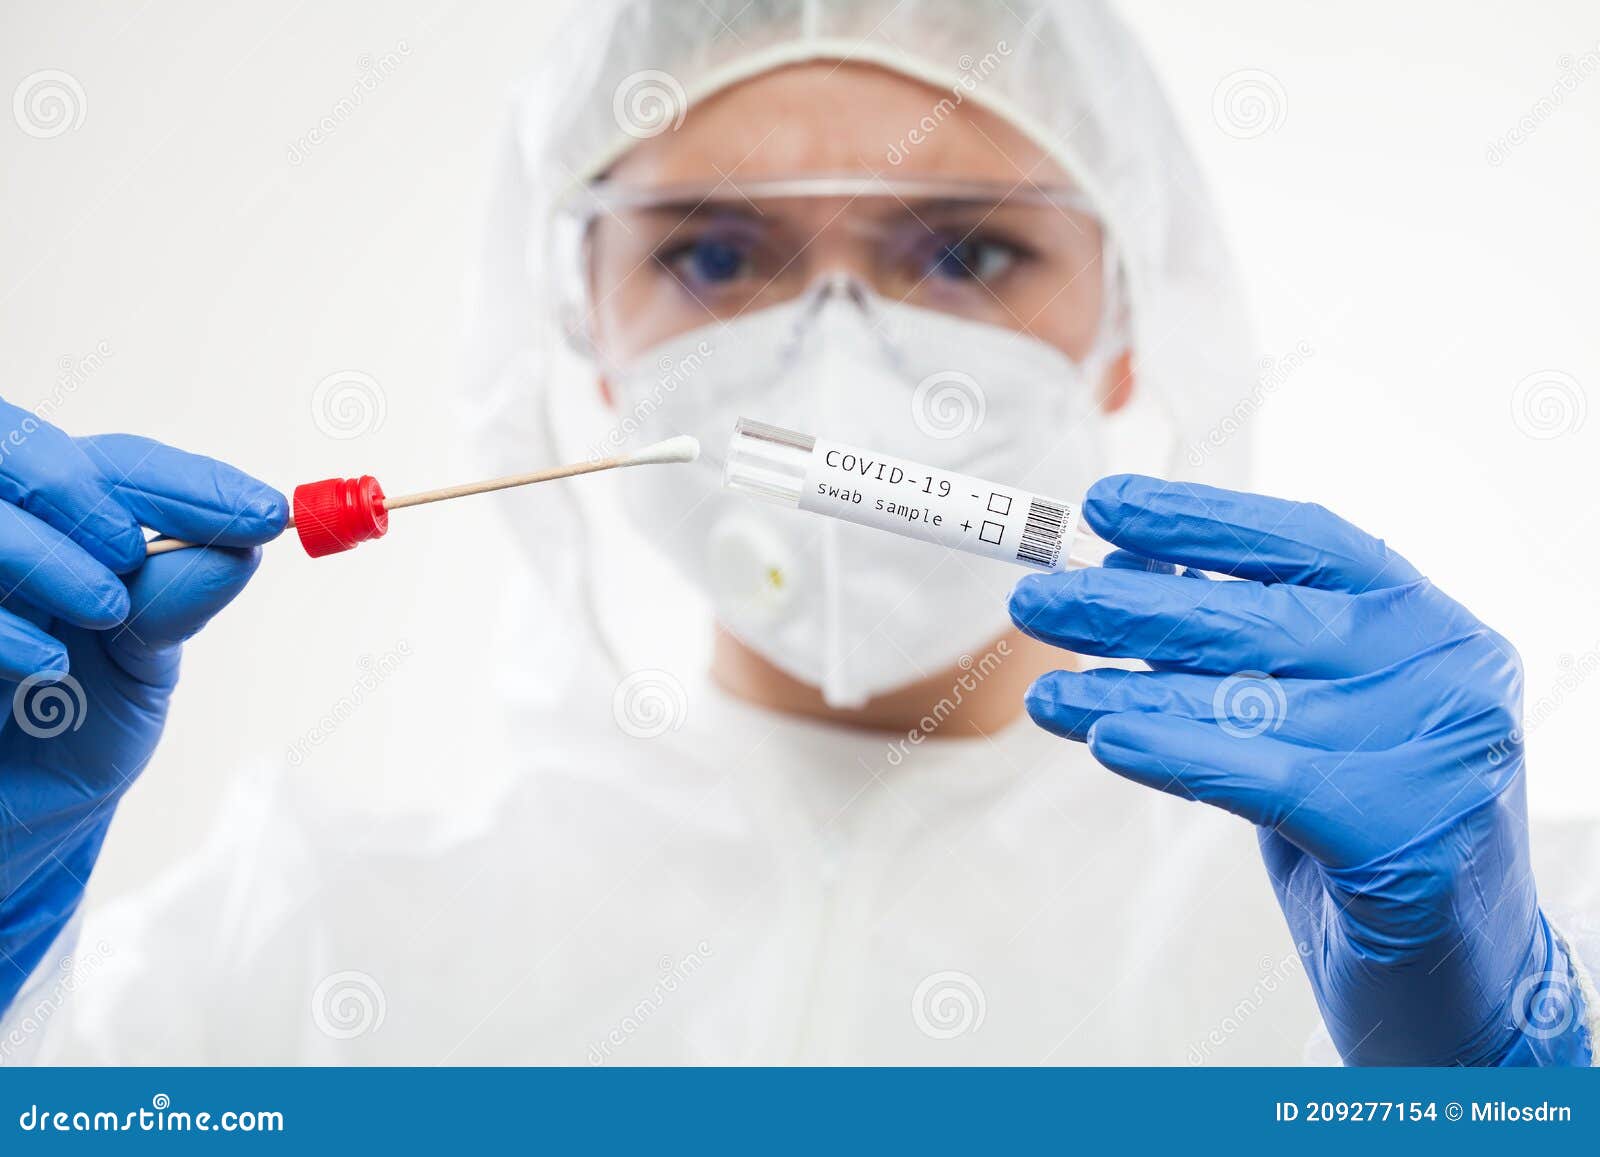 healthcare professional holding coronavirus covid-19 test kit equipment